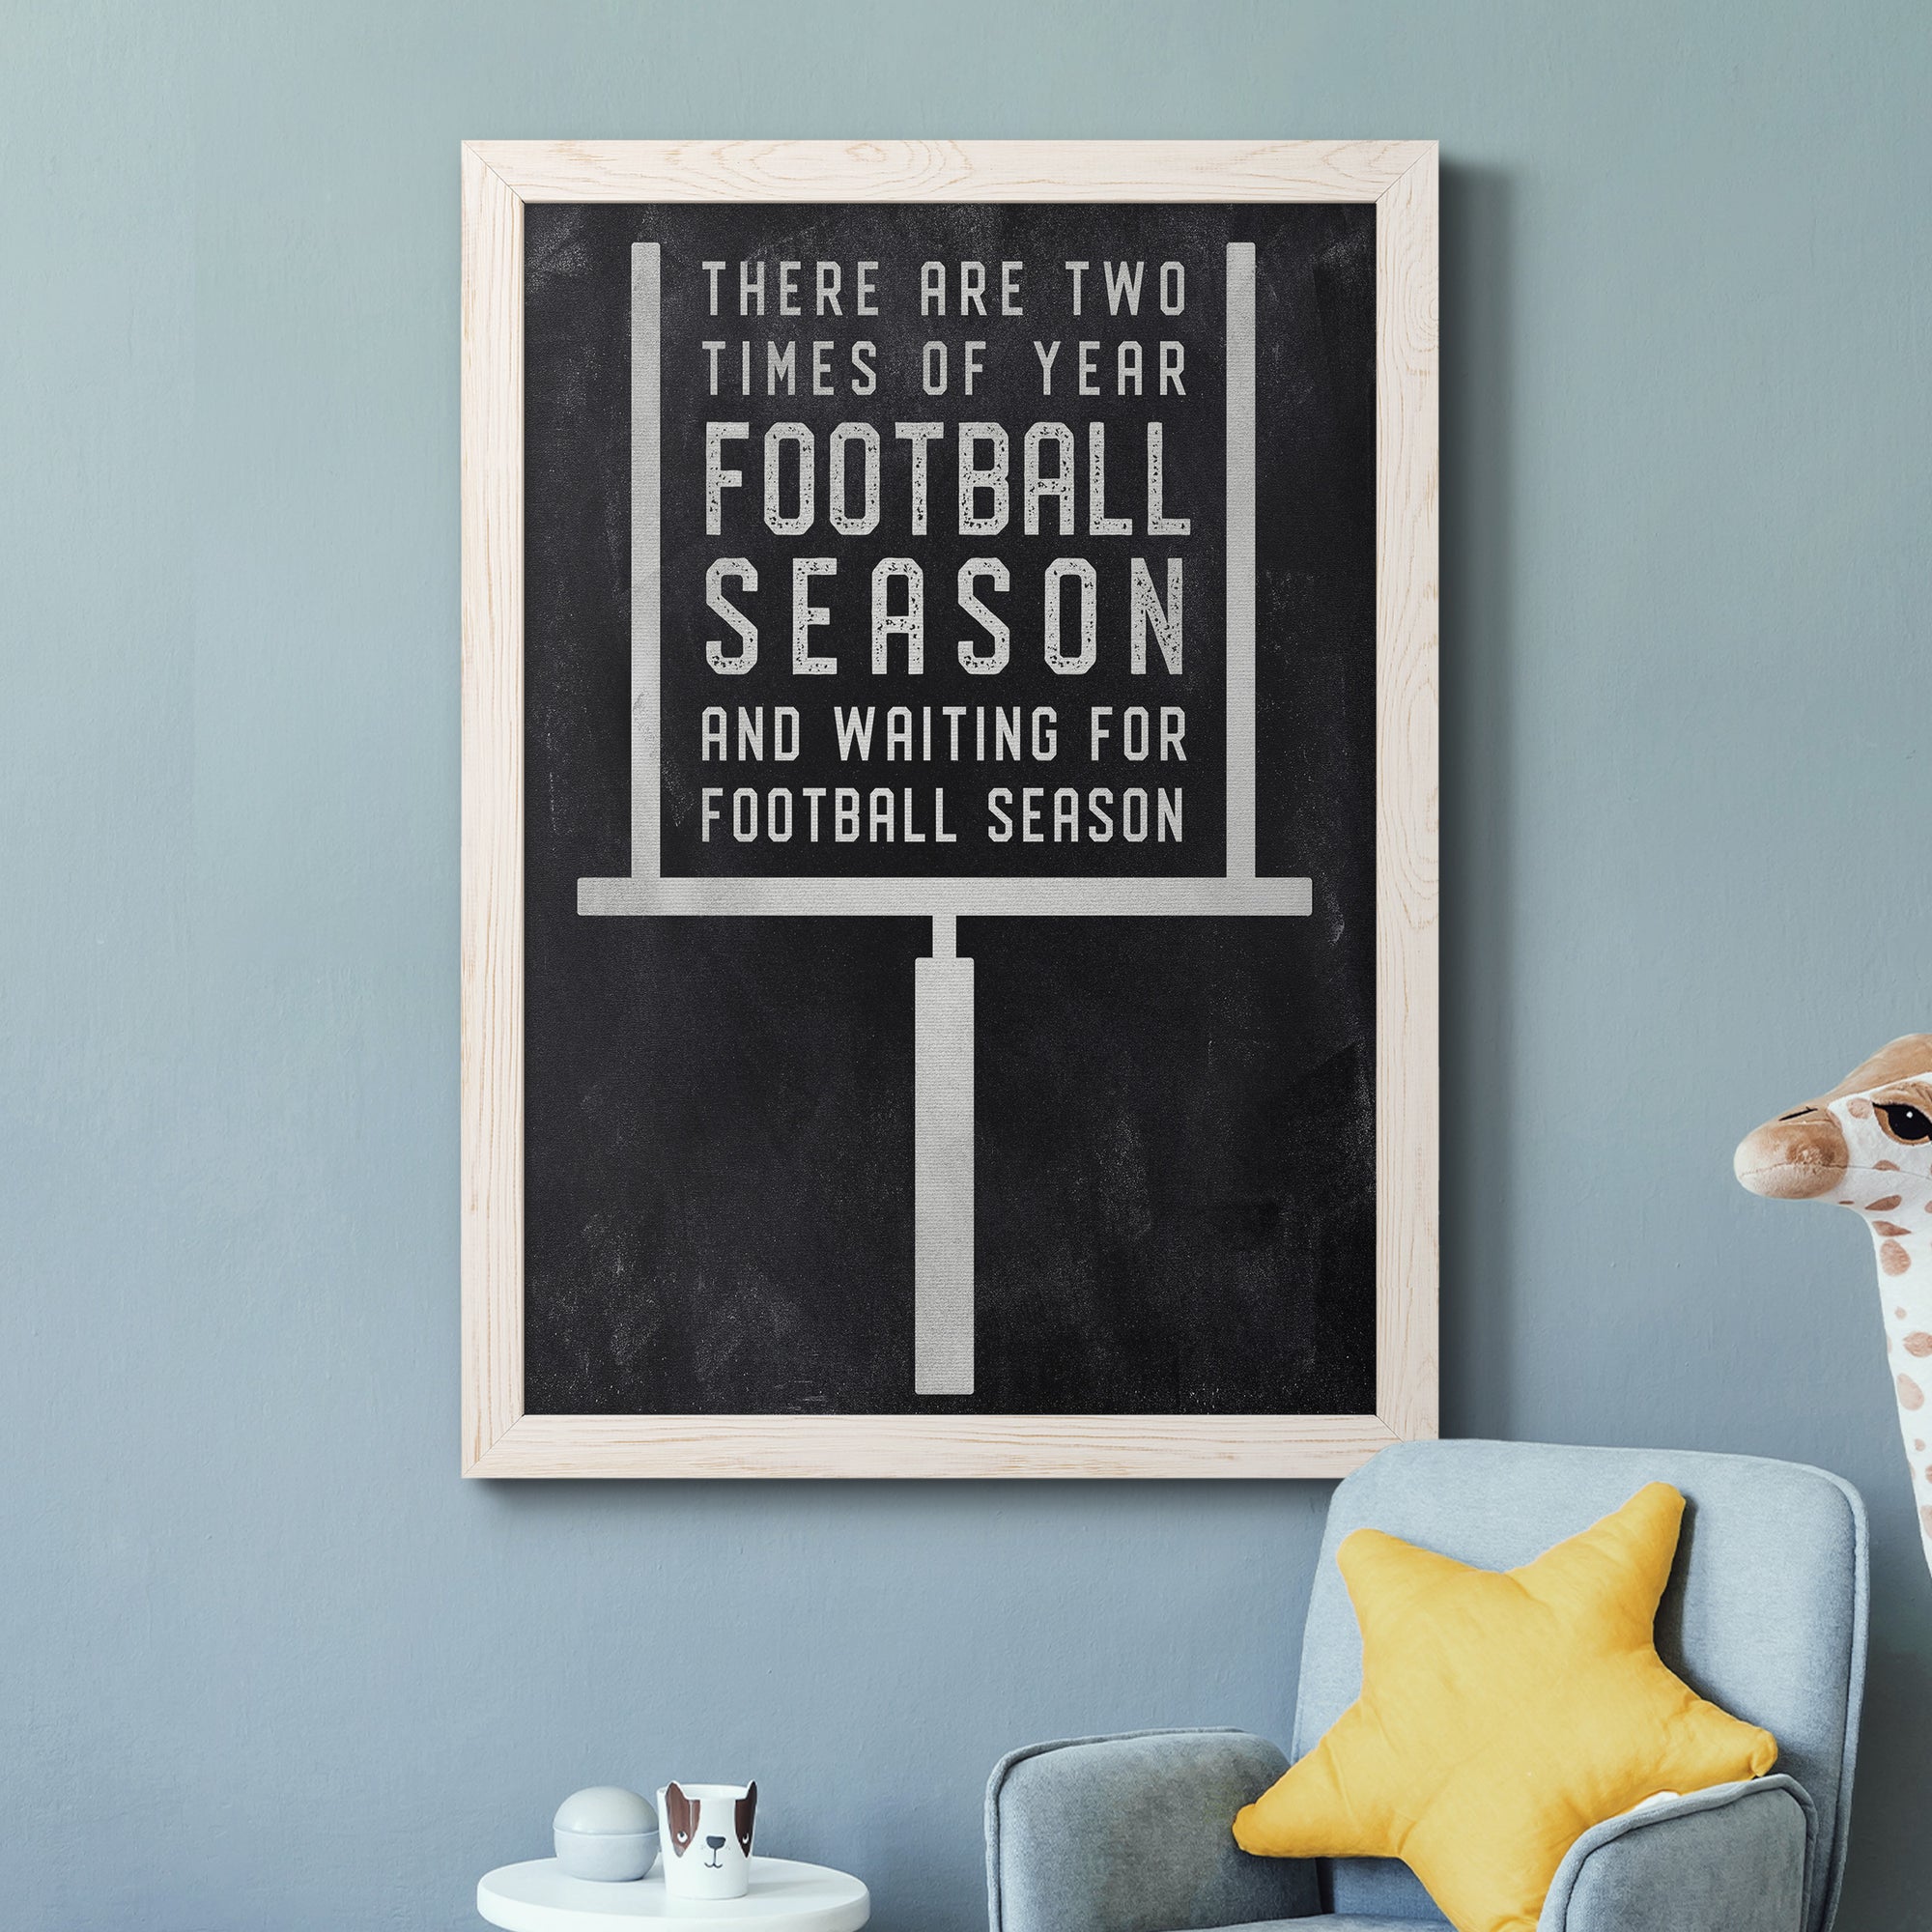 Football Season - Premium Canvas Framed in Barnwood - Ready to Hang